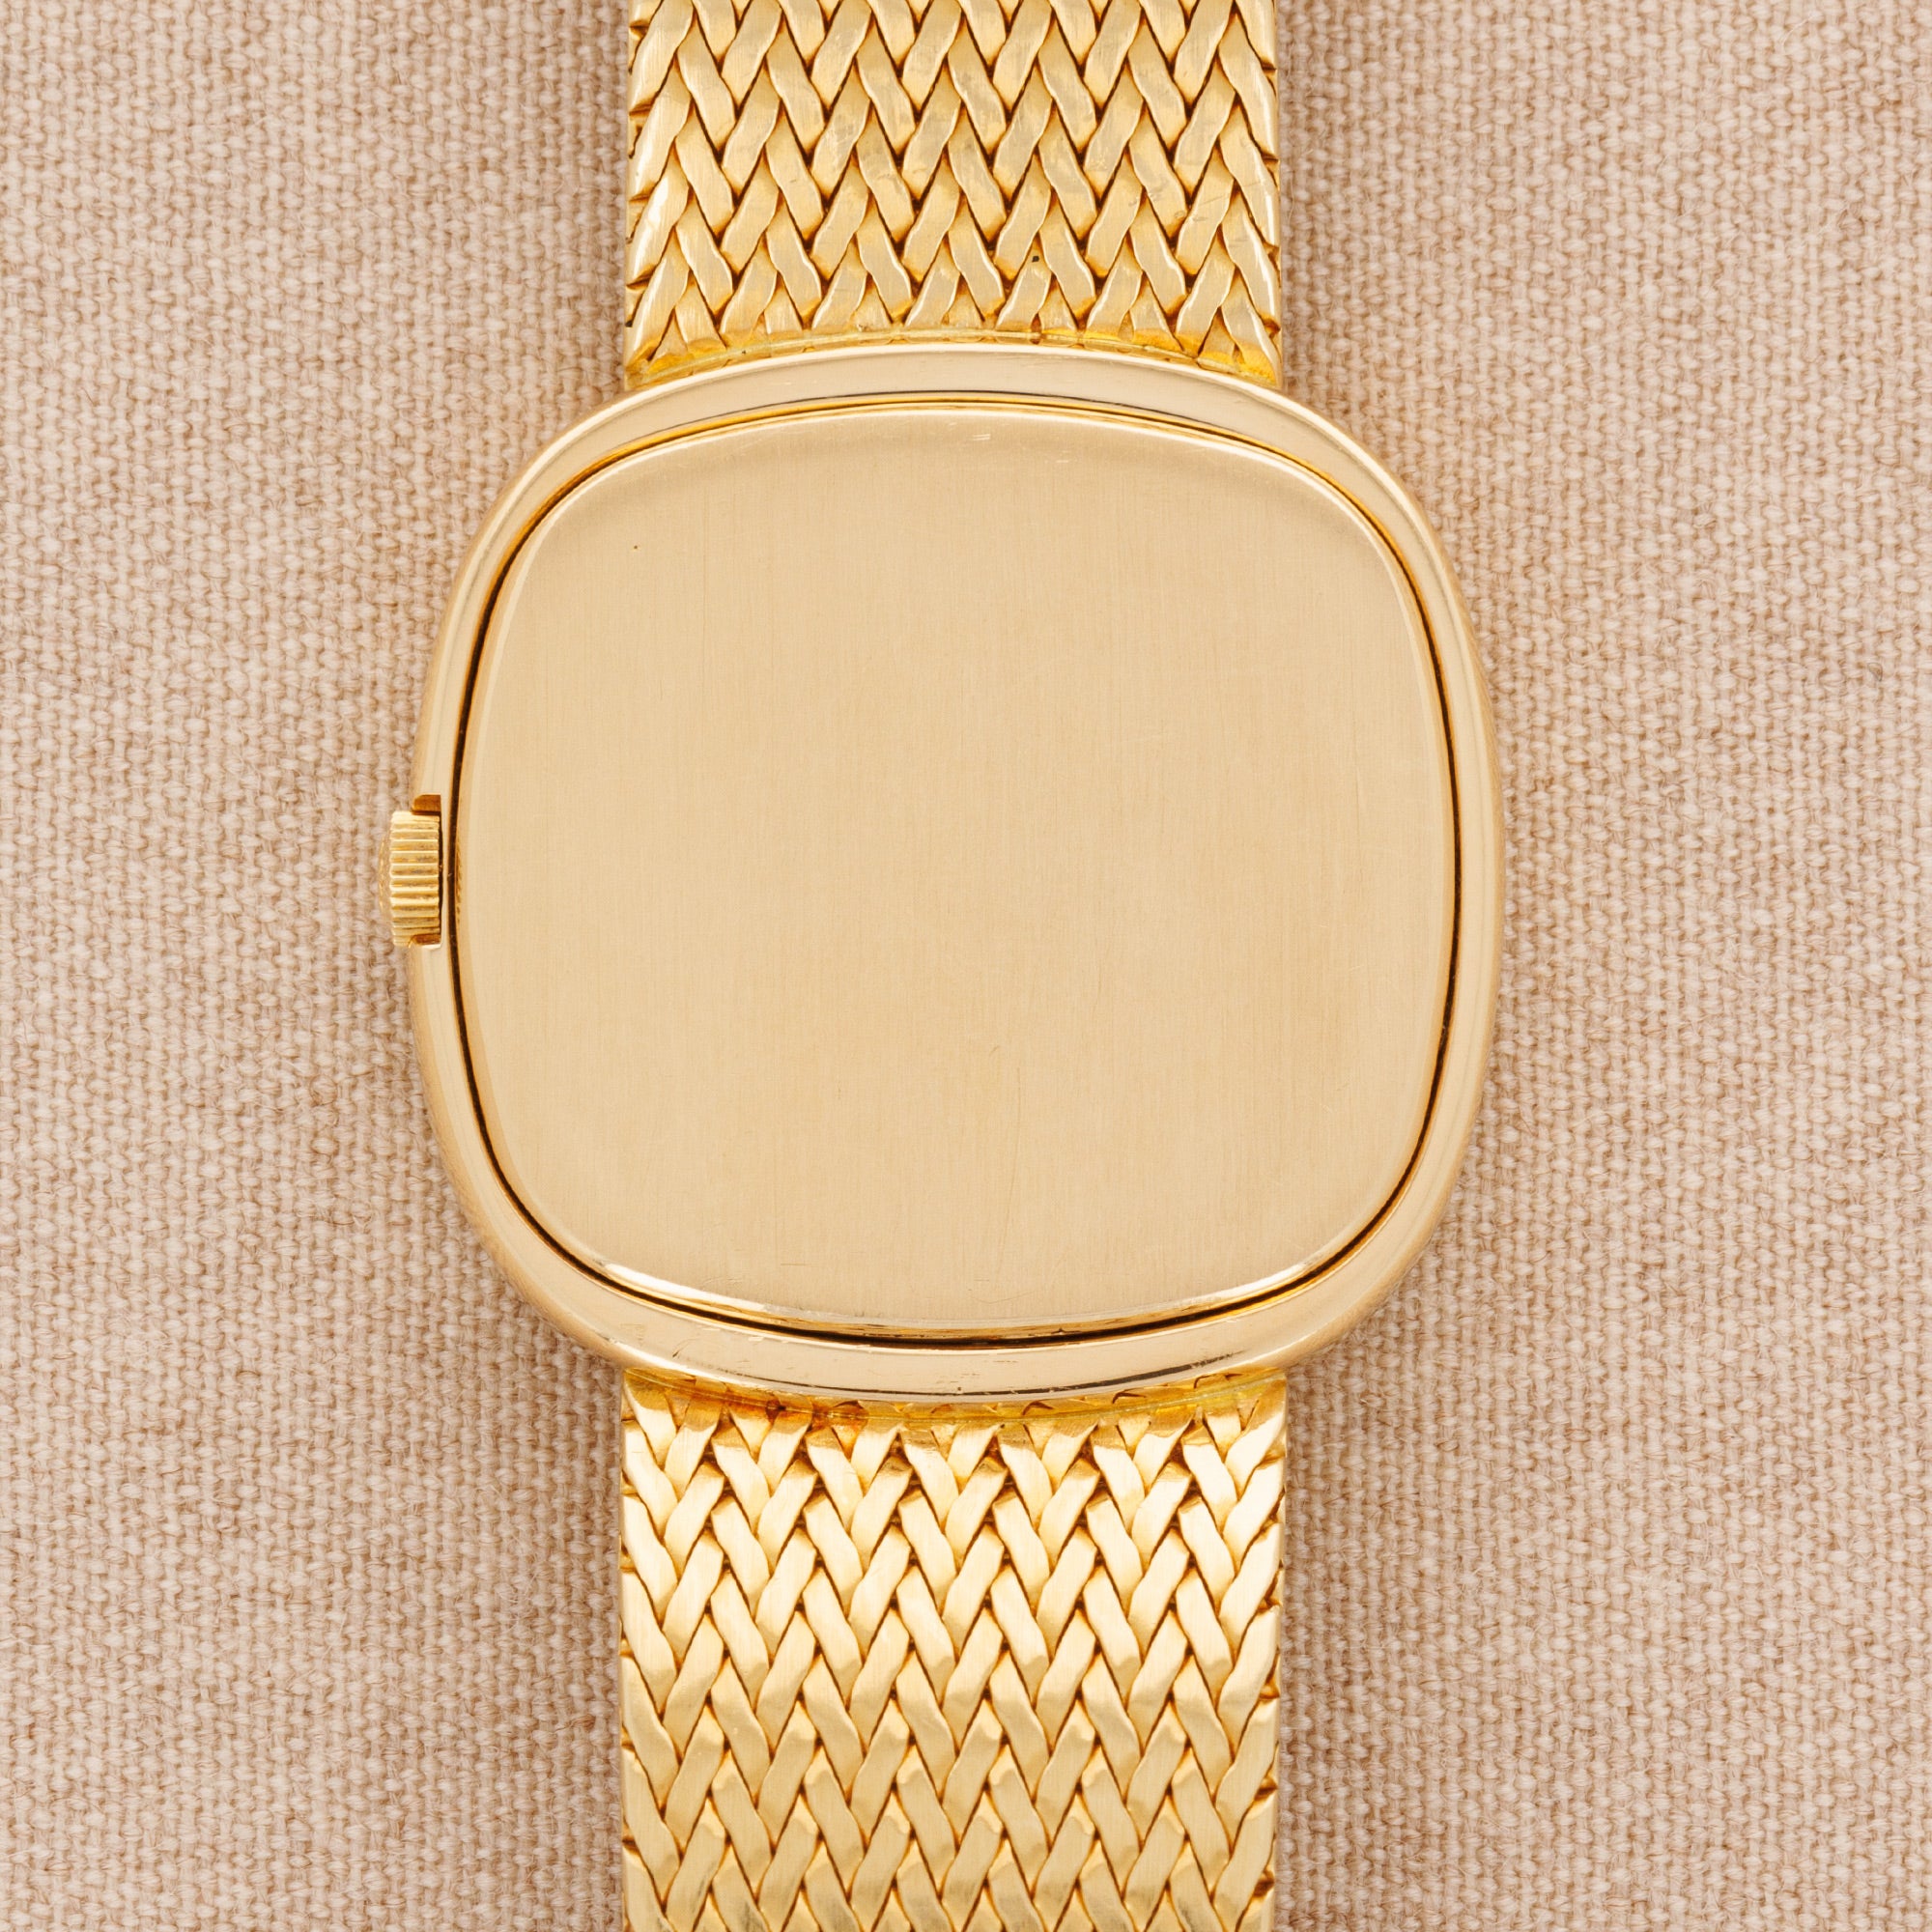 Patek Philippe - Patek Philippe Yellow Gold Ref. 3604 Retailed by Gubelin - The Keystone Watches